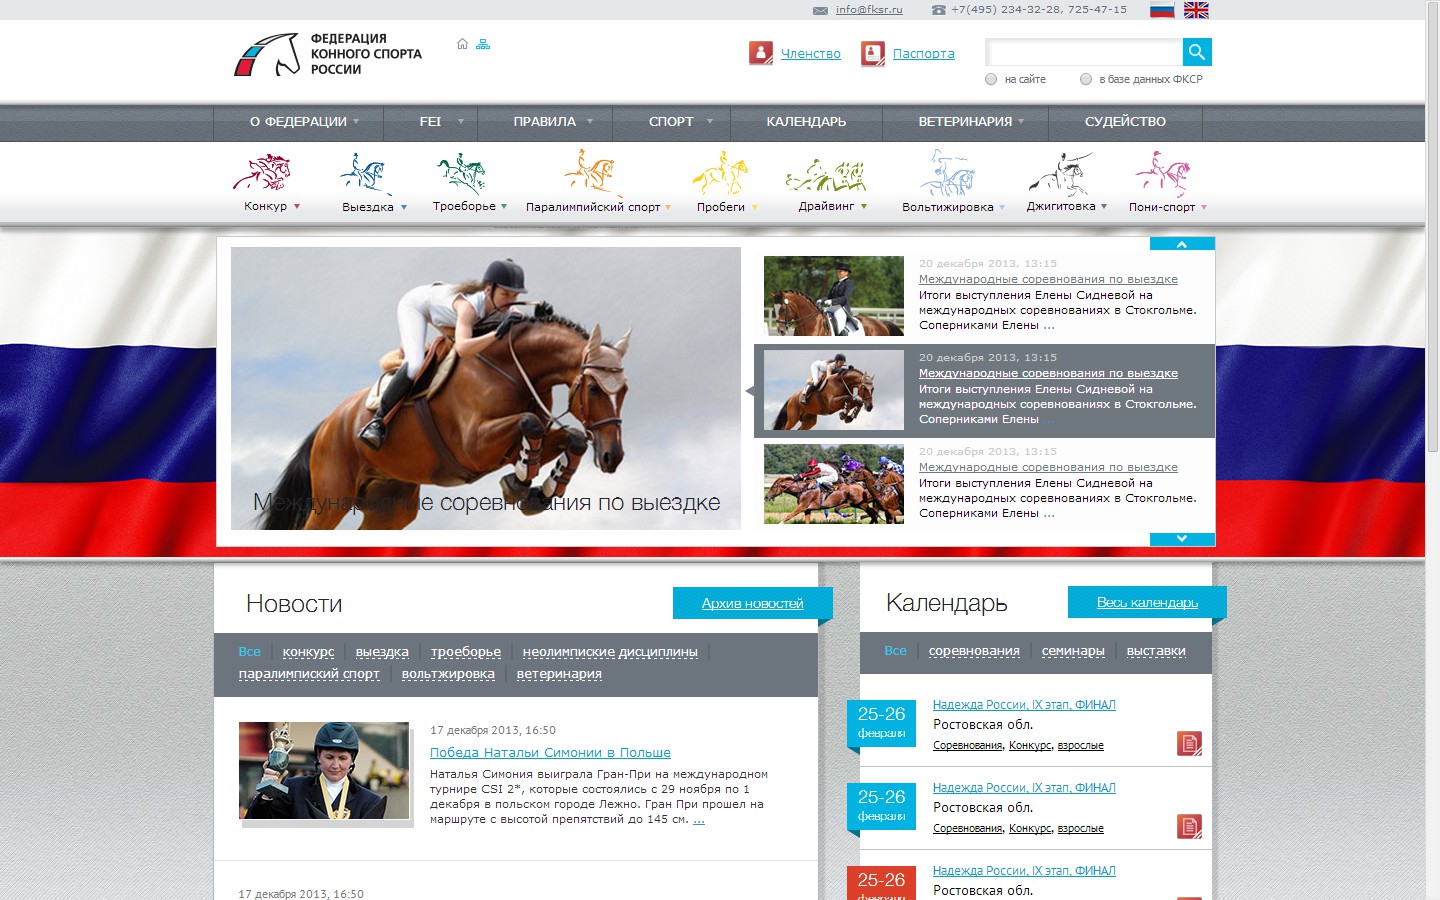 Сайт федерации конного спорта